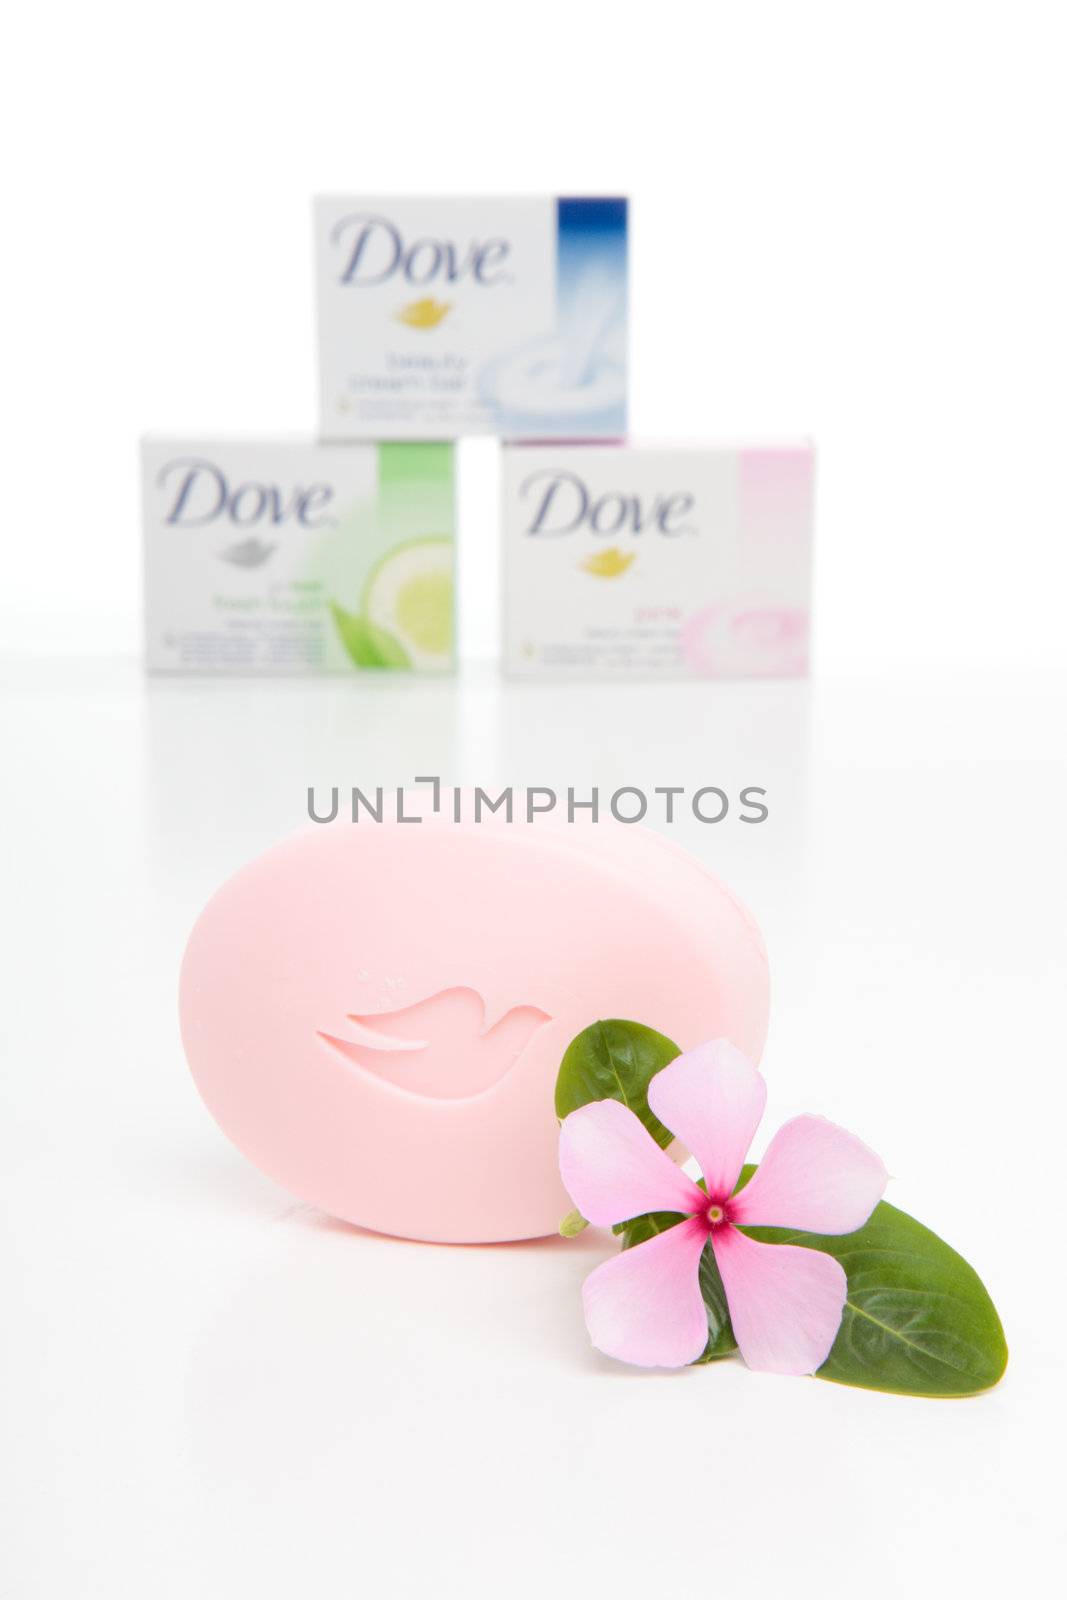 Dove cream soap bars by lovleah